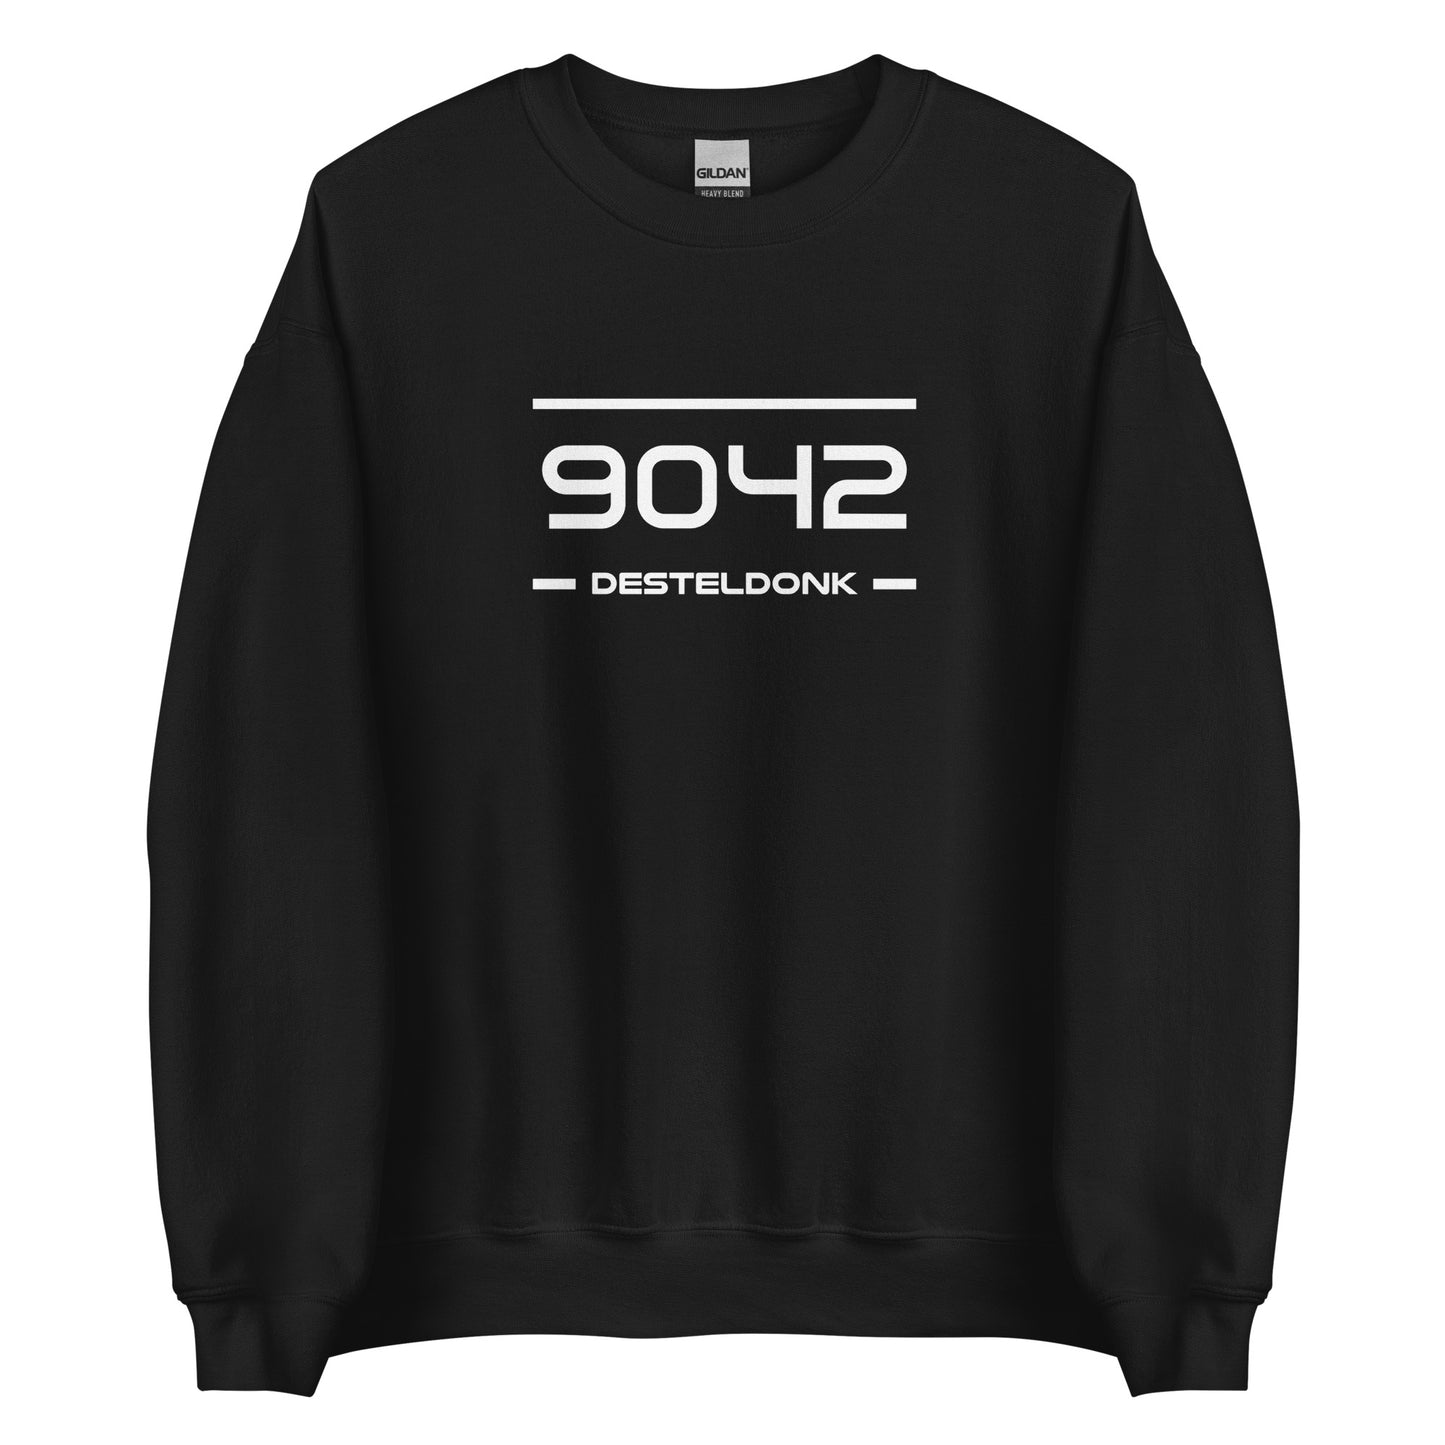 Sweater - 9042 - Desteldonk (M/V)